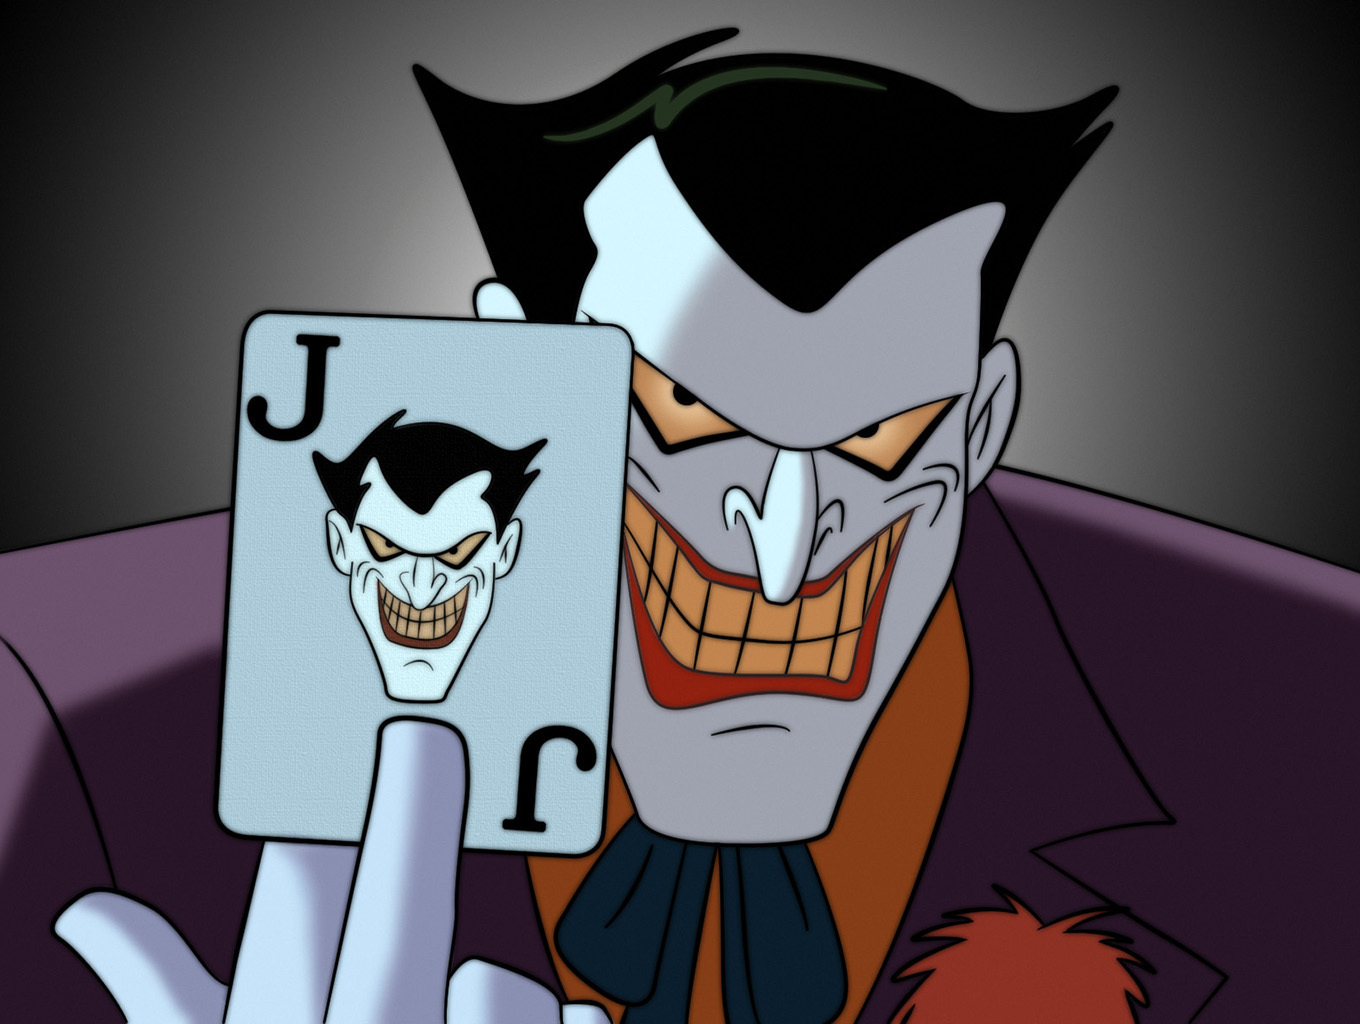 2. The Joker's iconic green hair in the Batman comics - wide 1